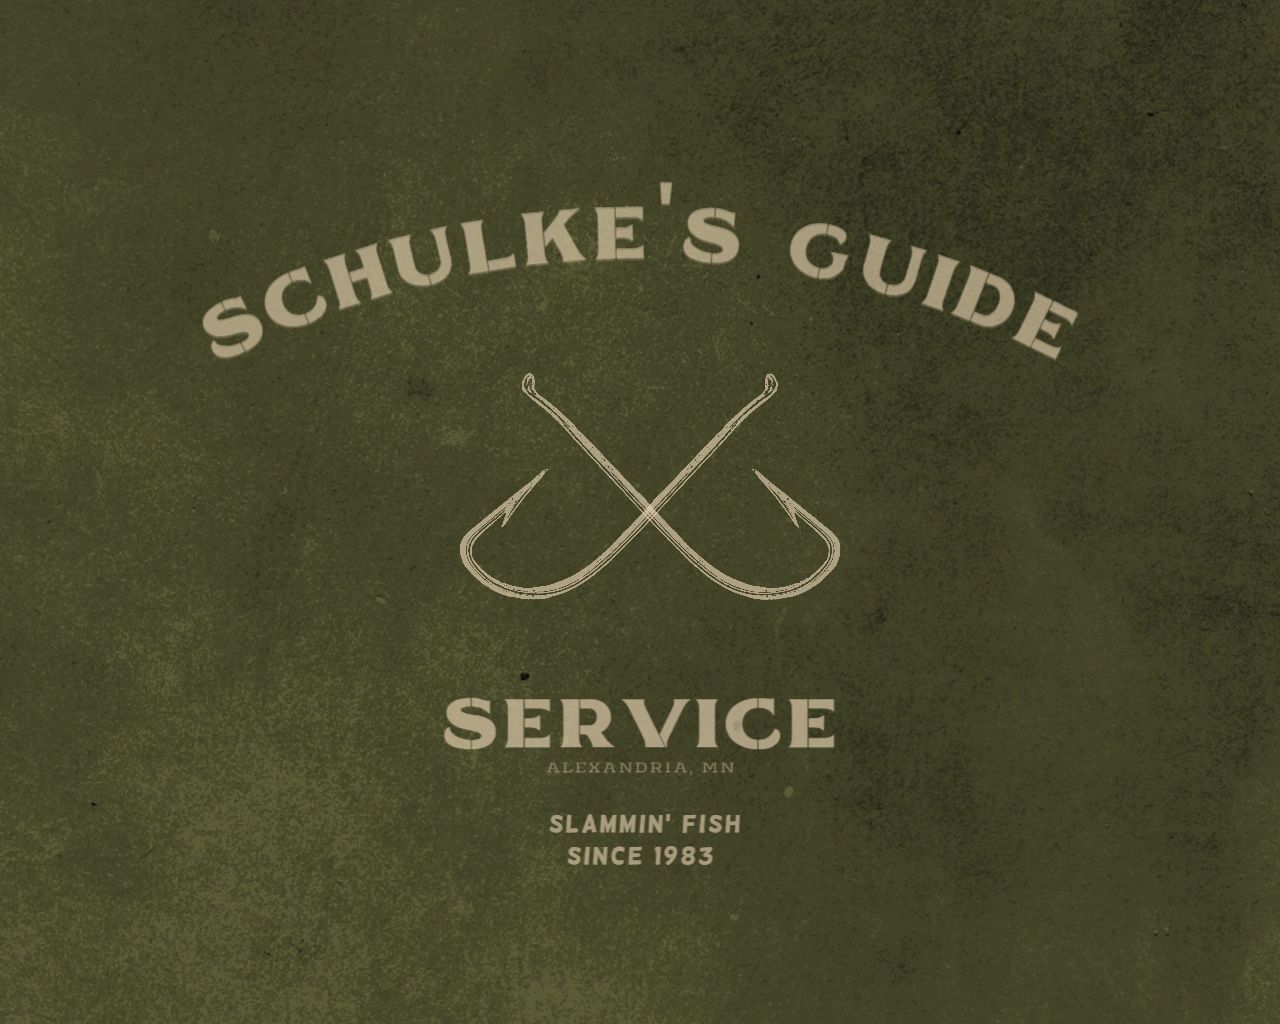 Schulke's Guide Service - Fishing Guide - Alexandria, Minnesota